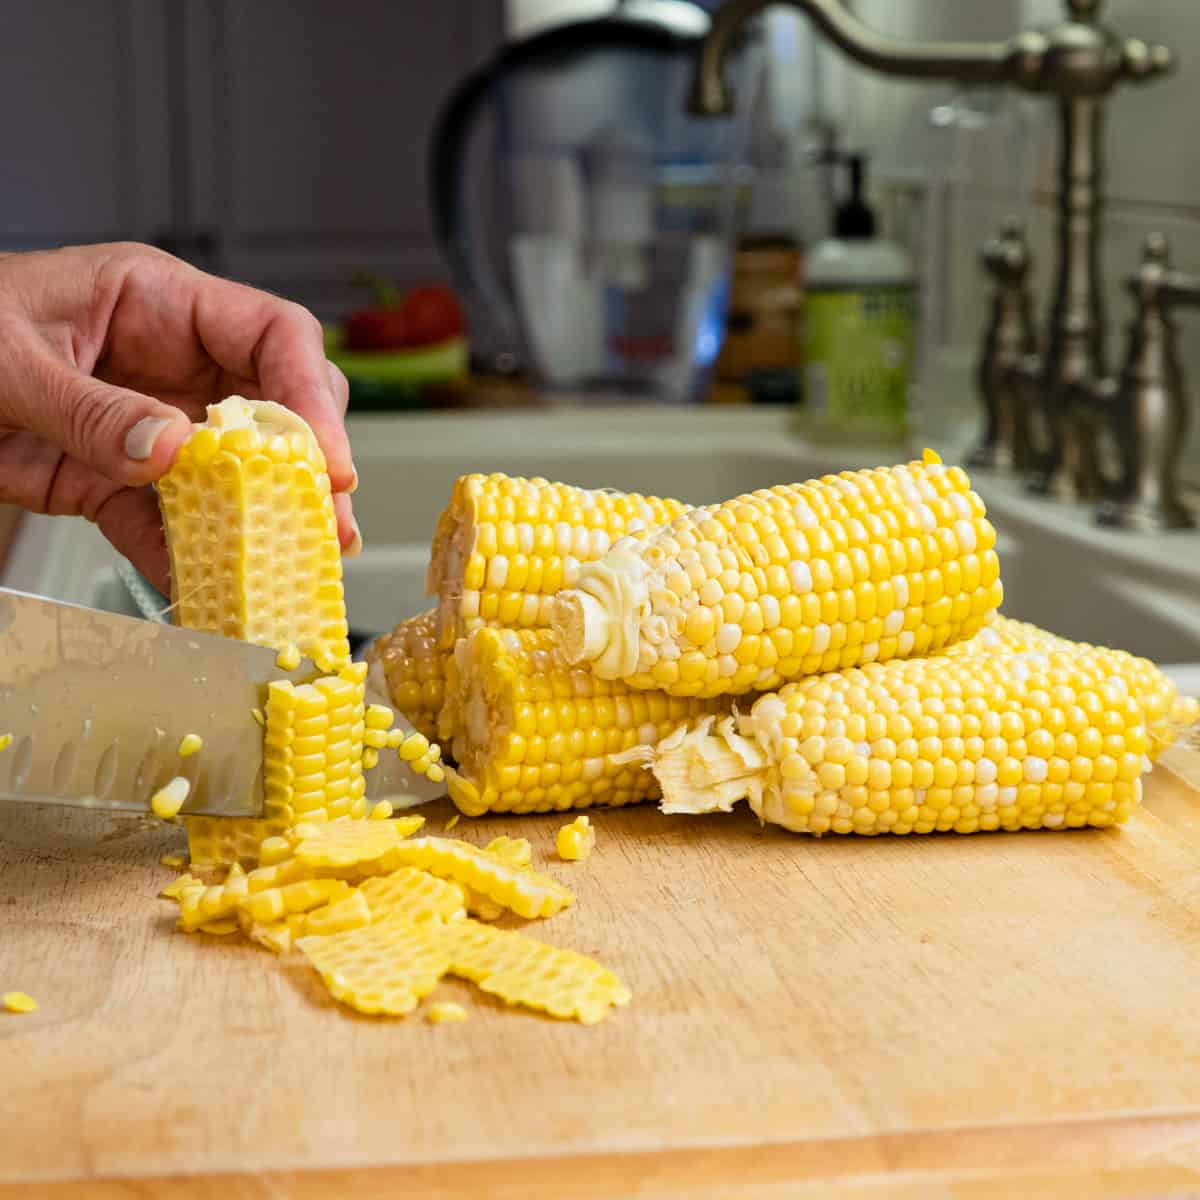 Cutting corn kernels off the cob